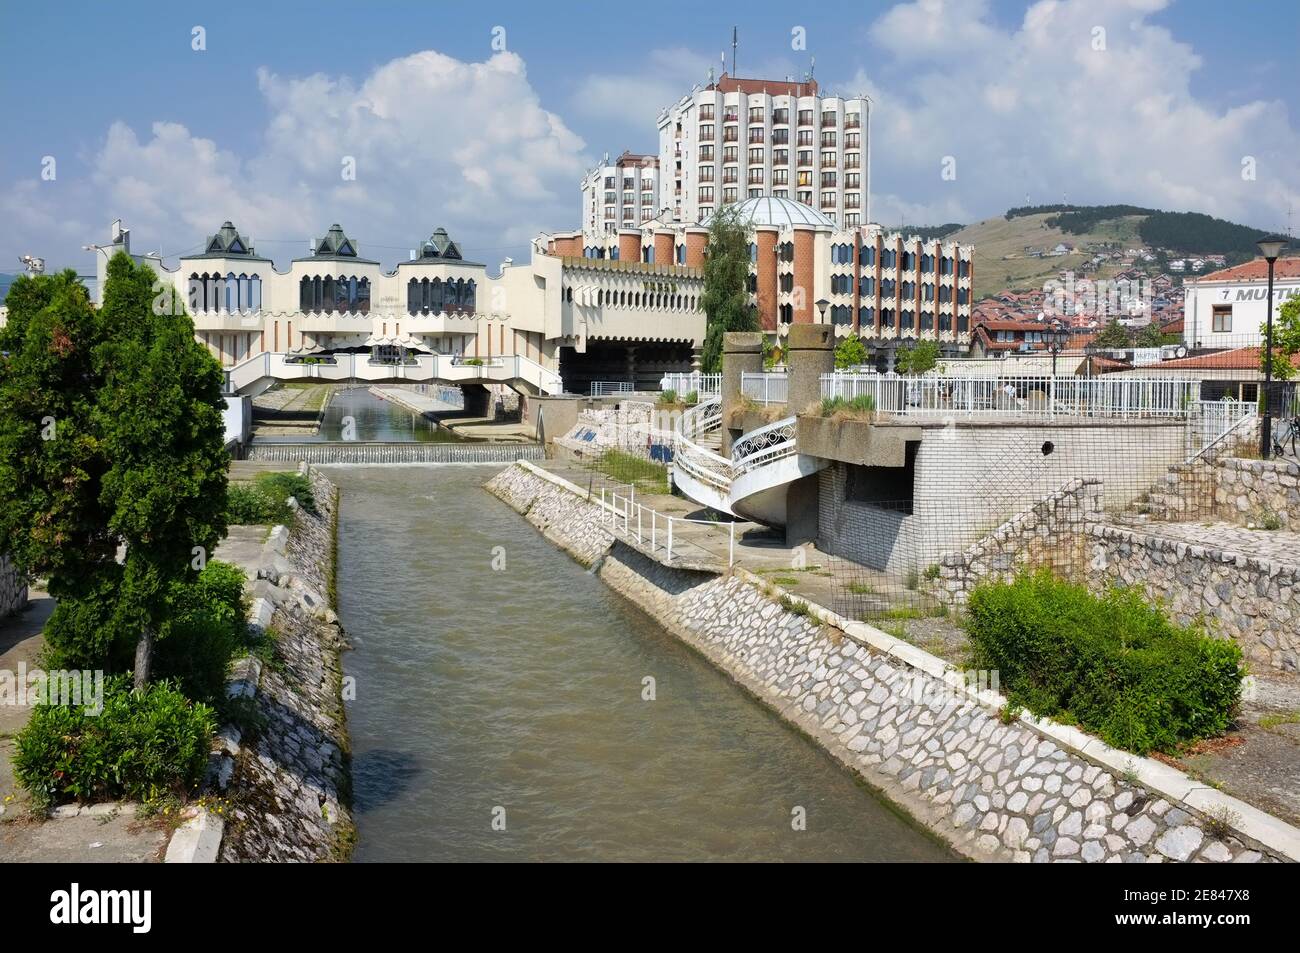 NOVI PAZAR, SERBIA - 26 July: the modern city center of Novi Pazar with the architectural complex of the hotel Vrbak on the Raska river. Shot in 26 Ju Stock Photo